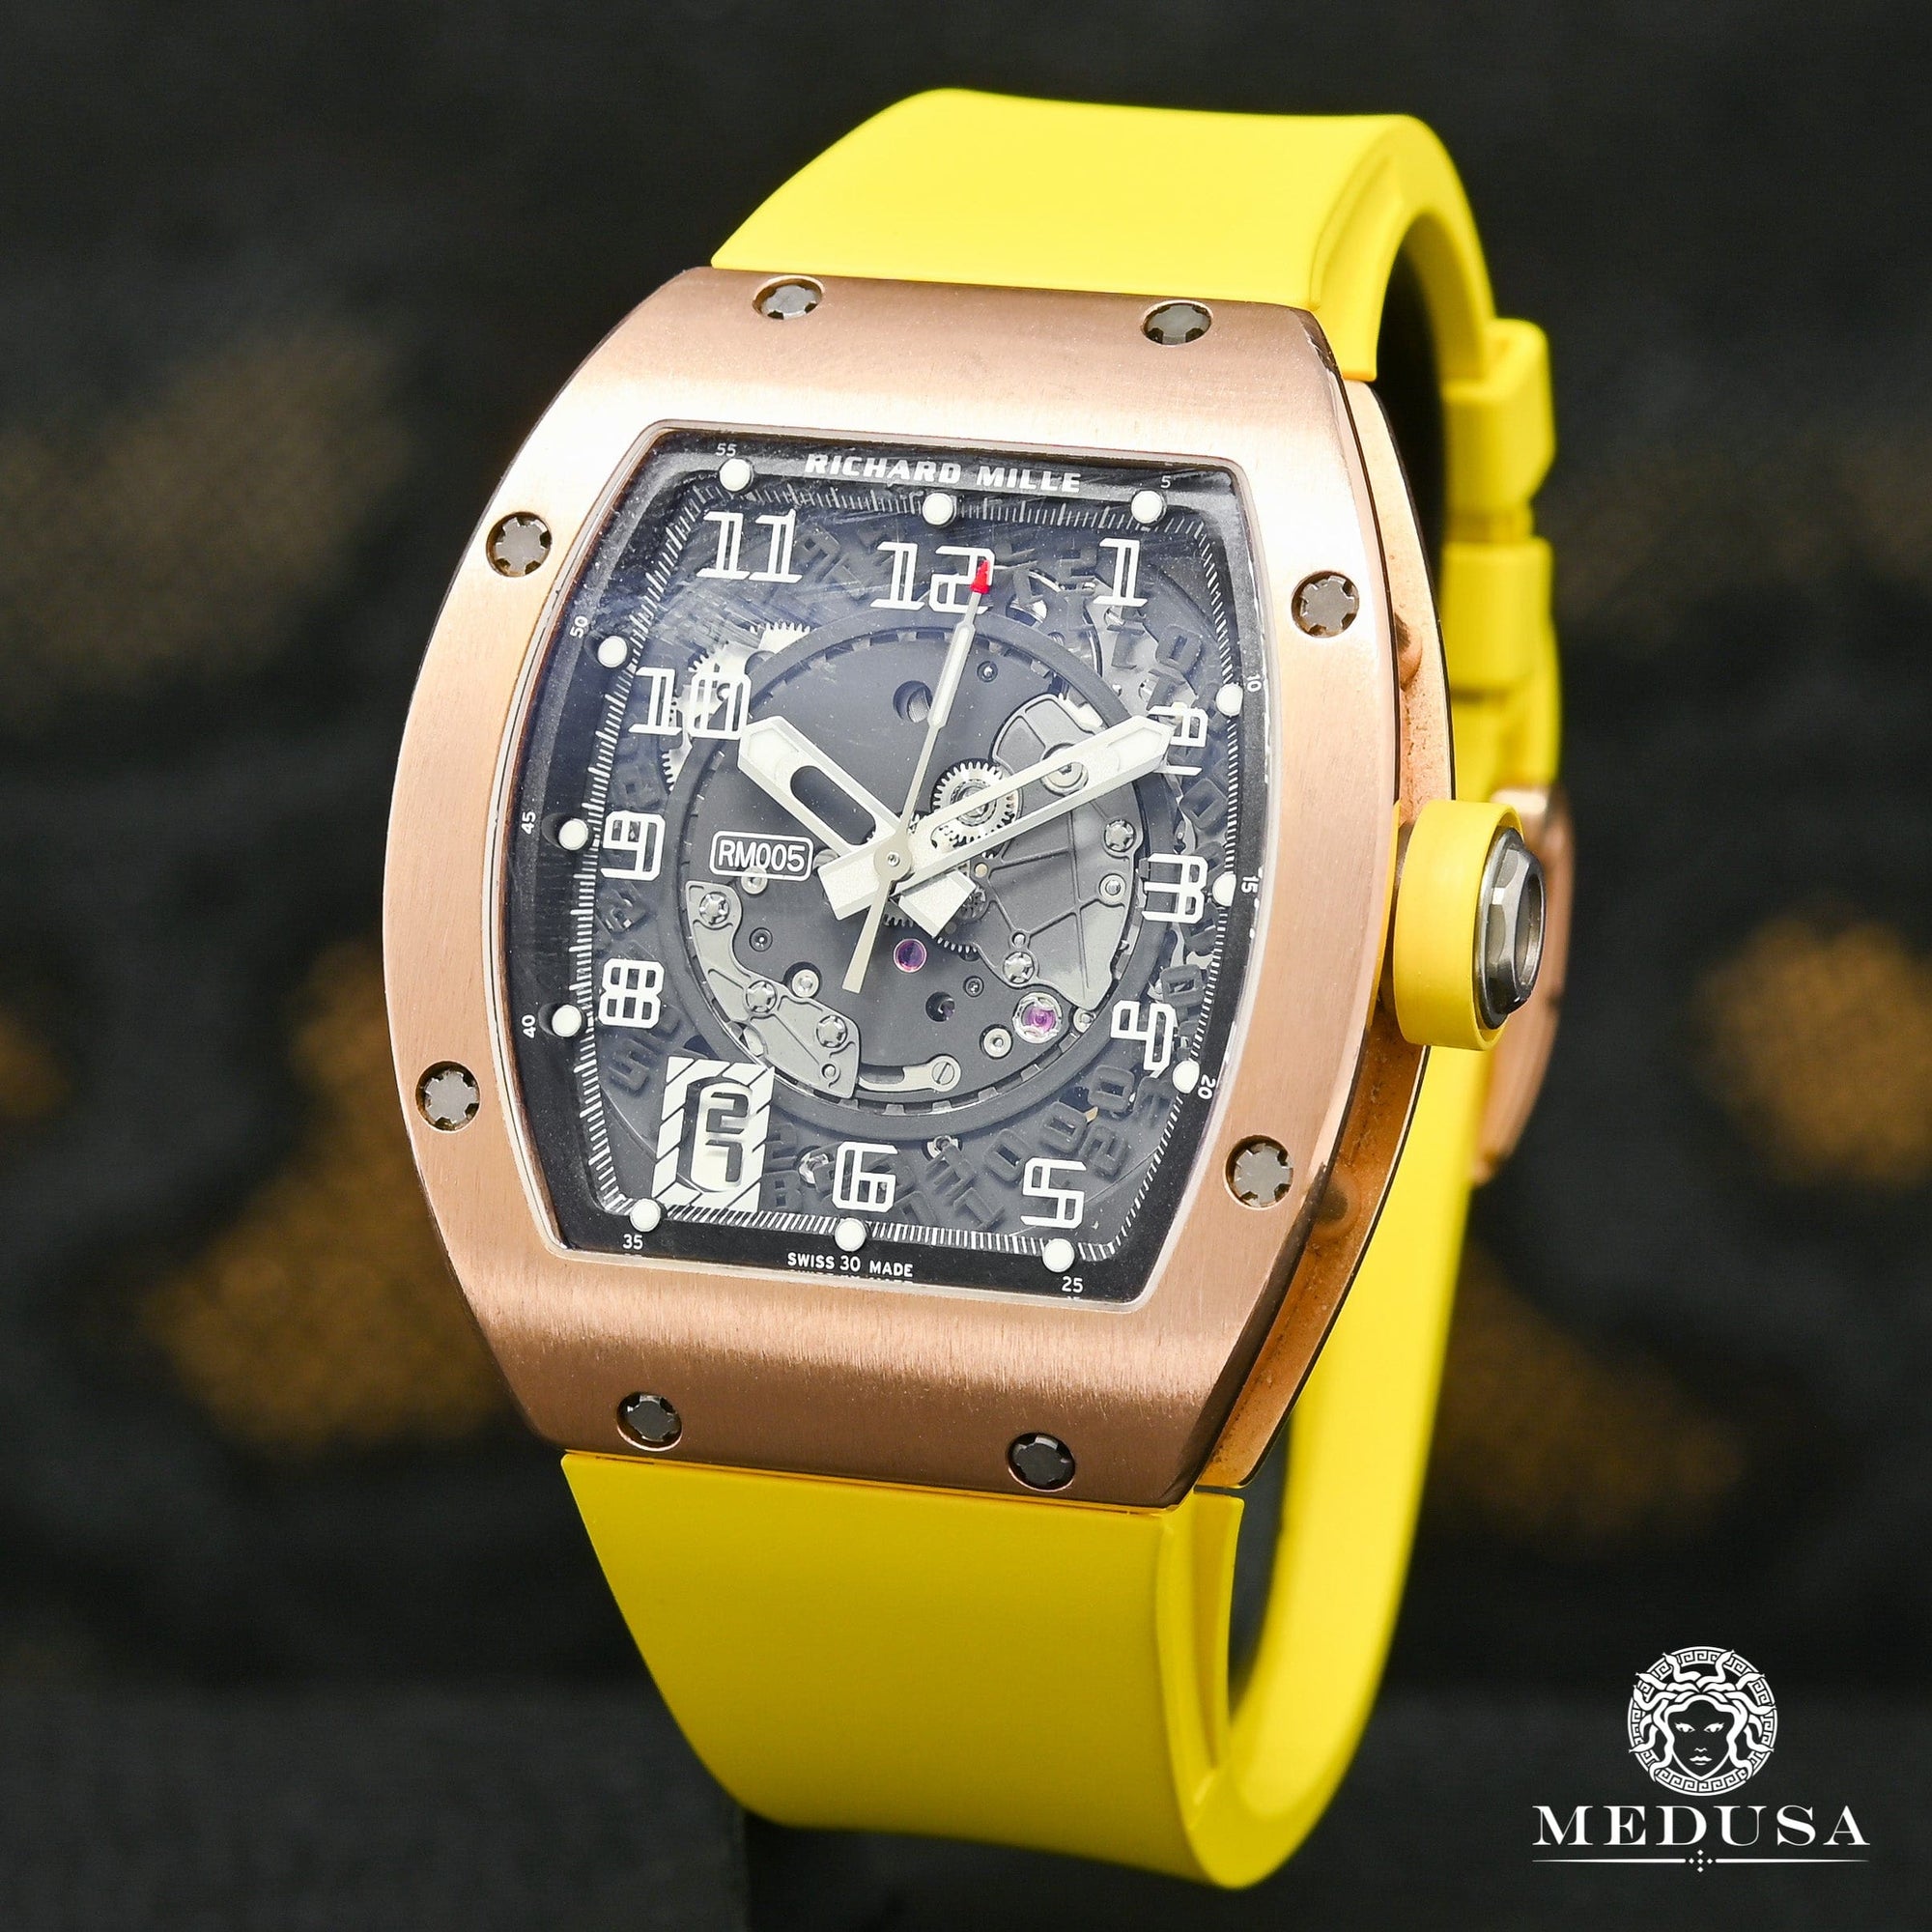 Richard Mille Watch | Richard Mille Rose Gold 45mm Men's Watch - RM005 Rose Gold